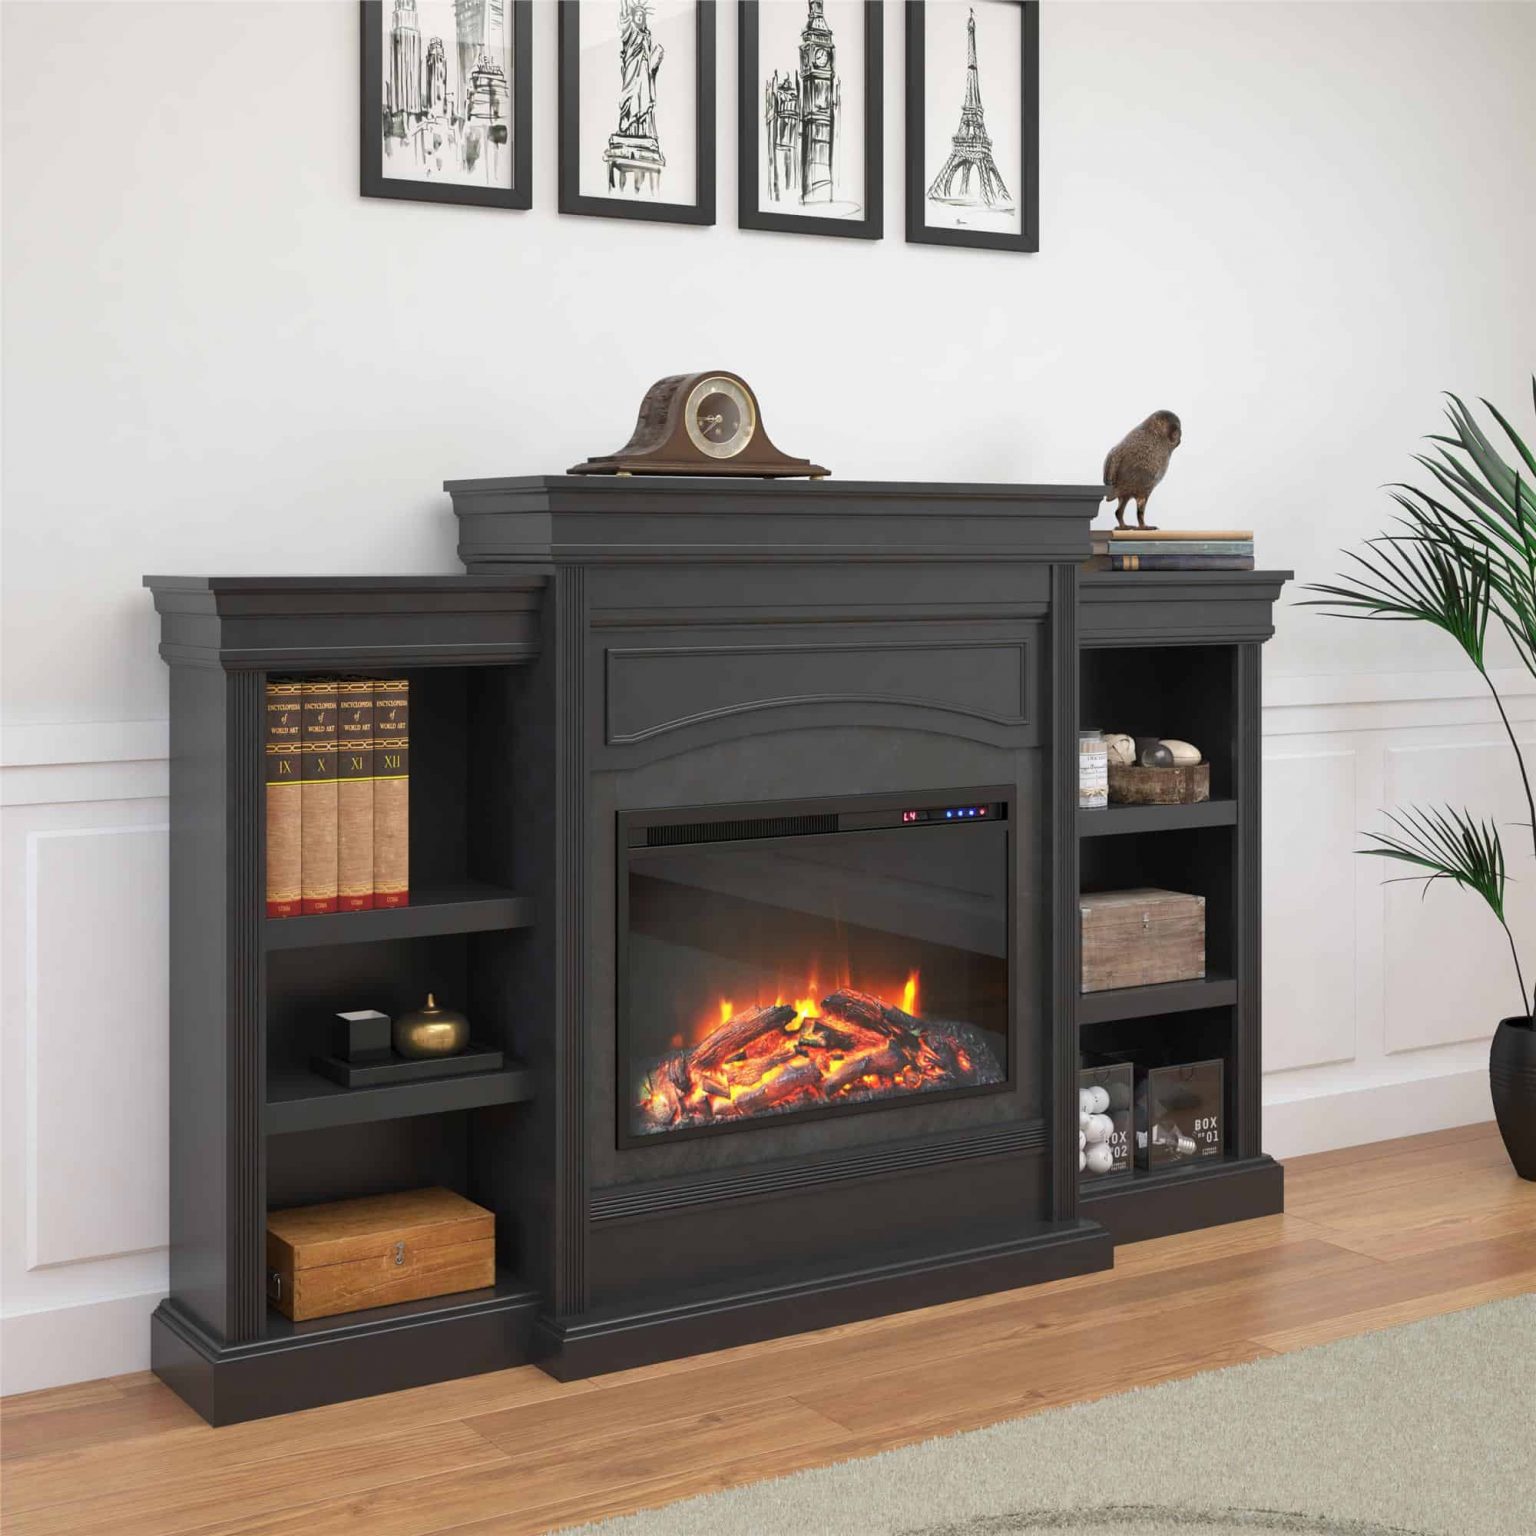 Ameriwood Home Lamont Mantel Fireplace Black 1536x1536 